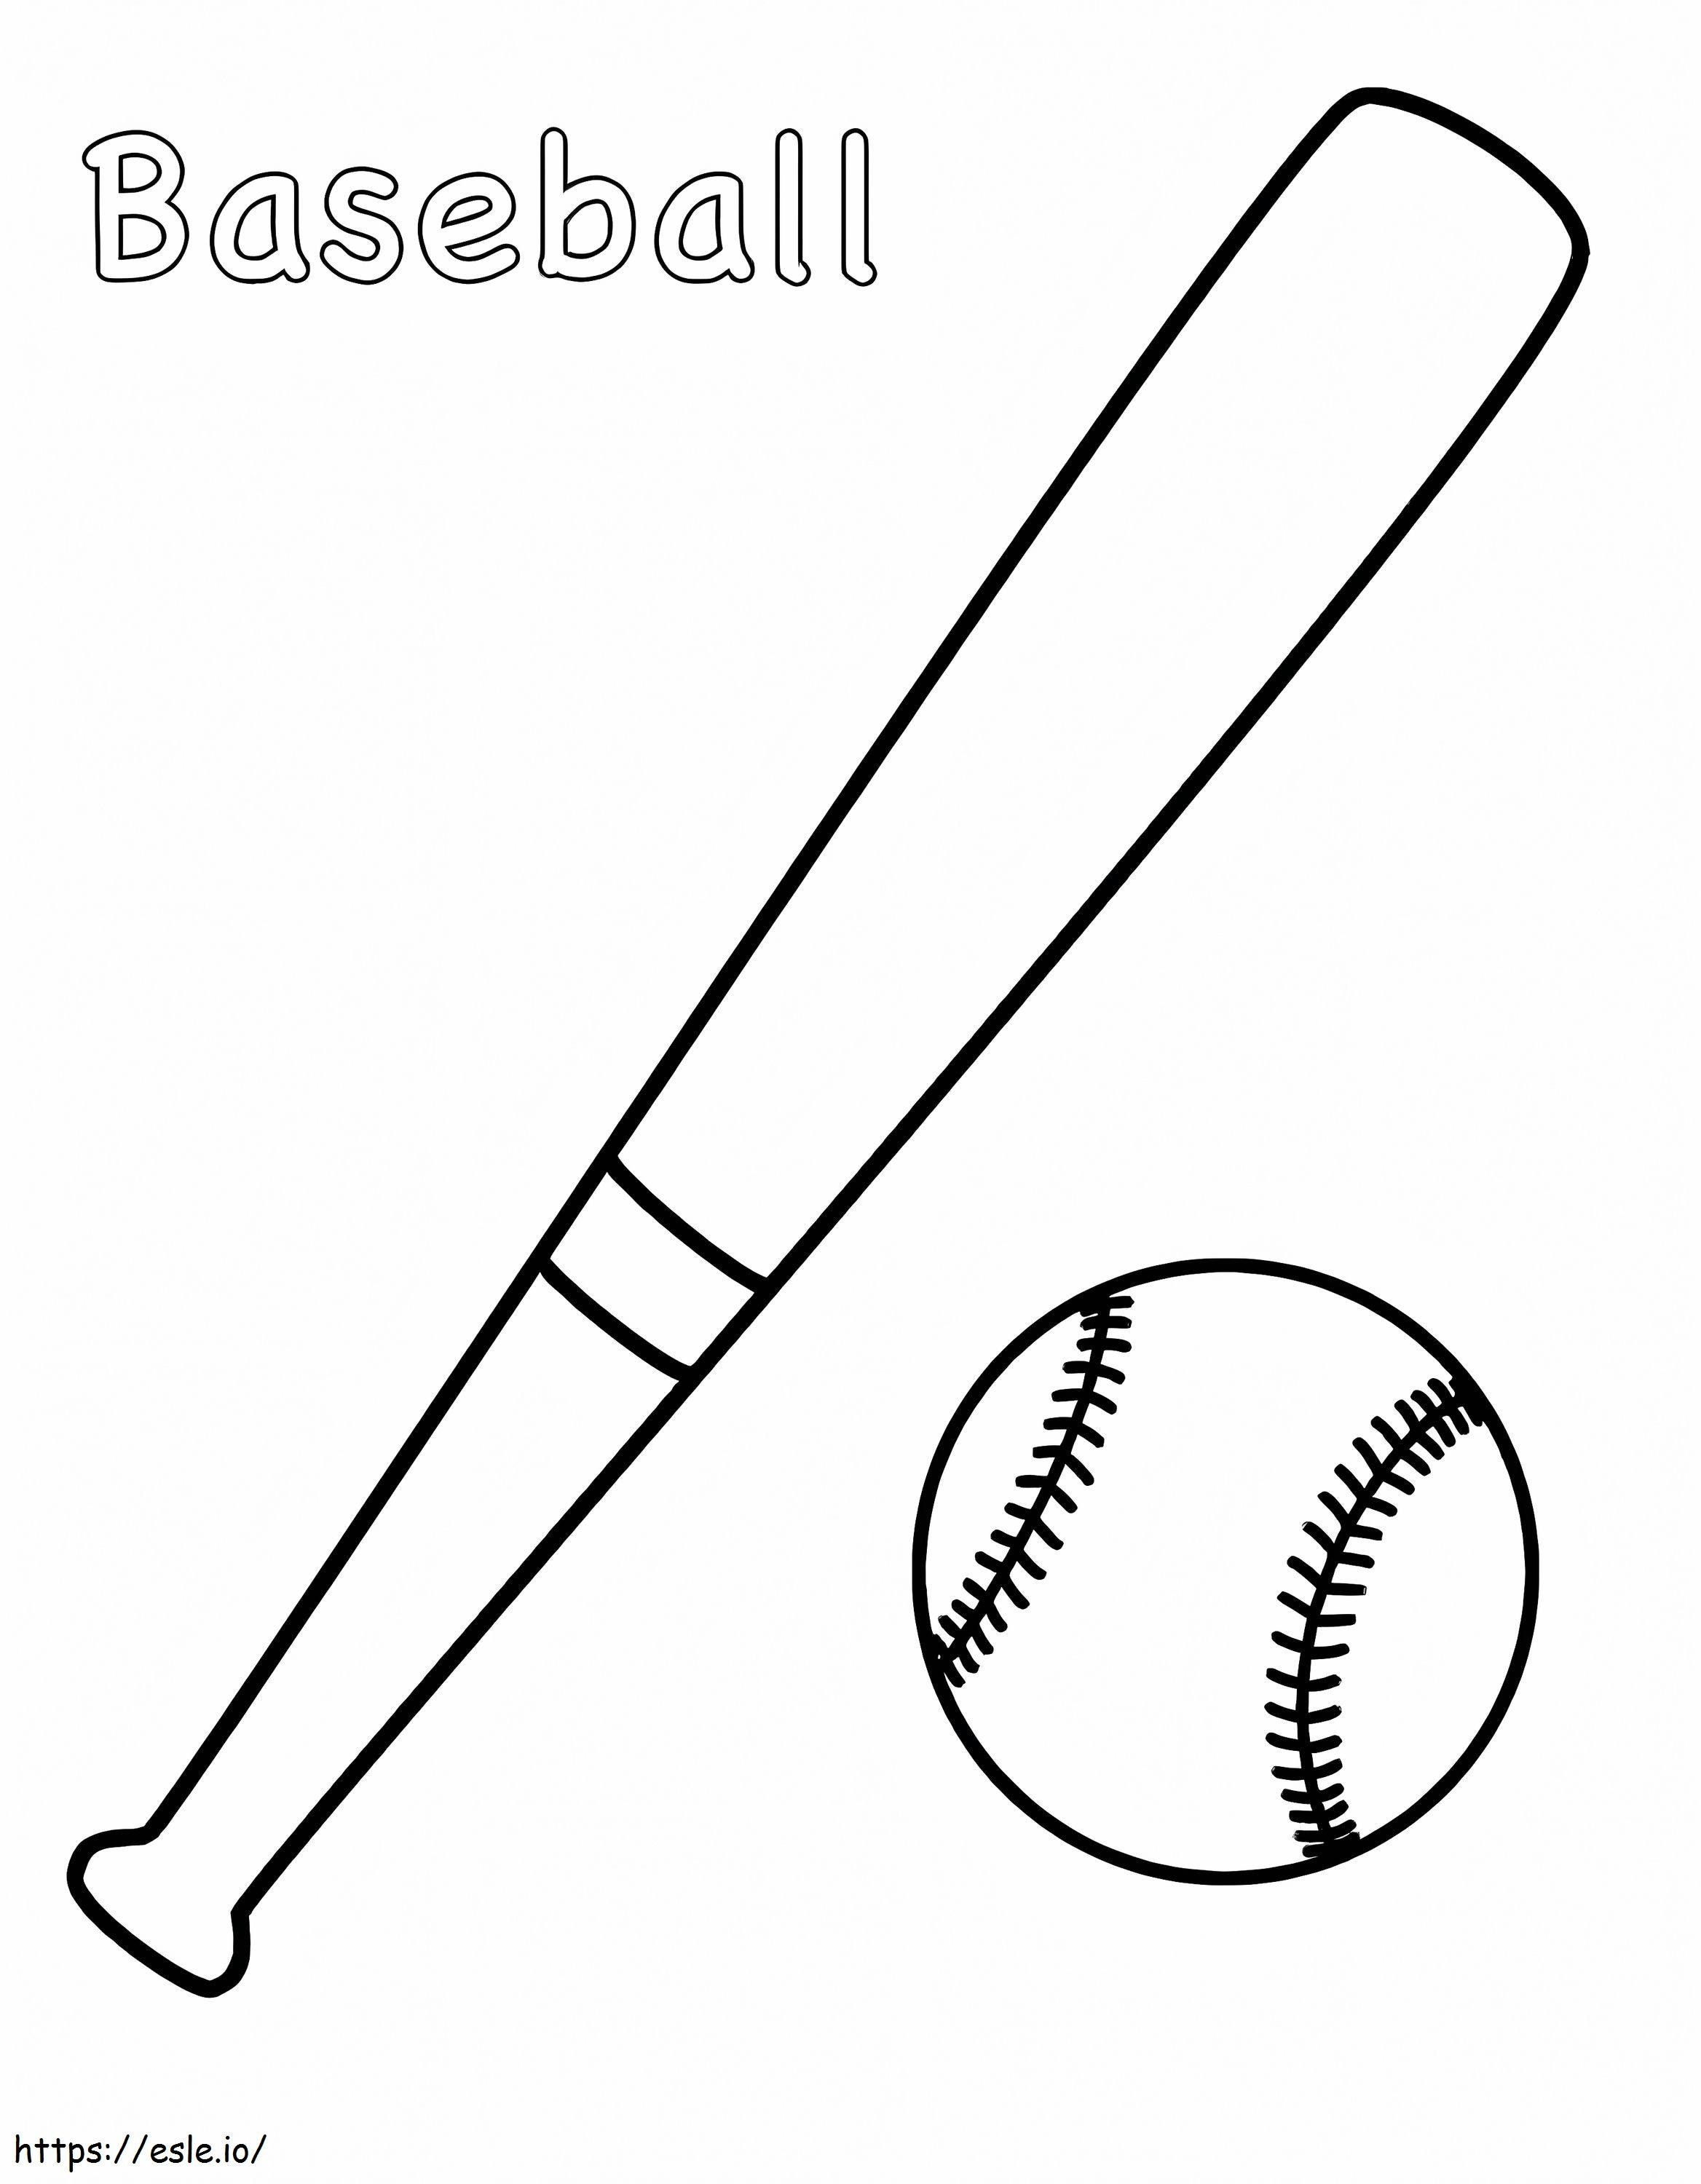 Bate de béisbol y pelota para colorear